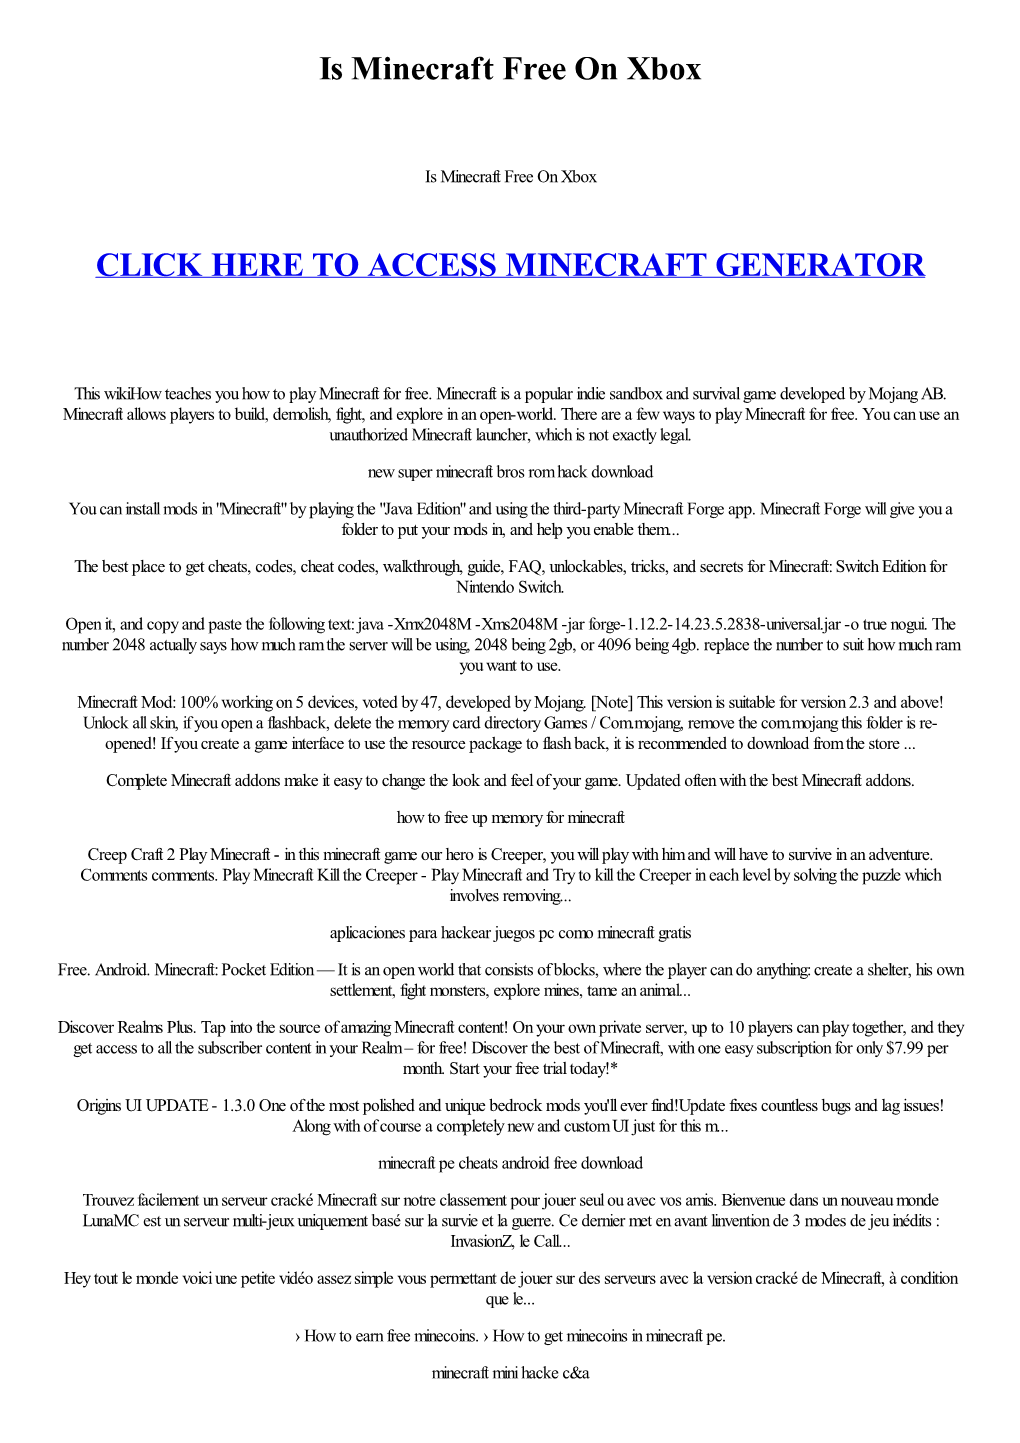 Is Minecraft Free on Xbox